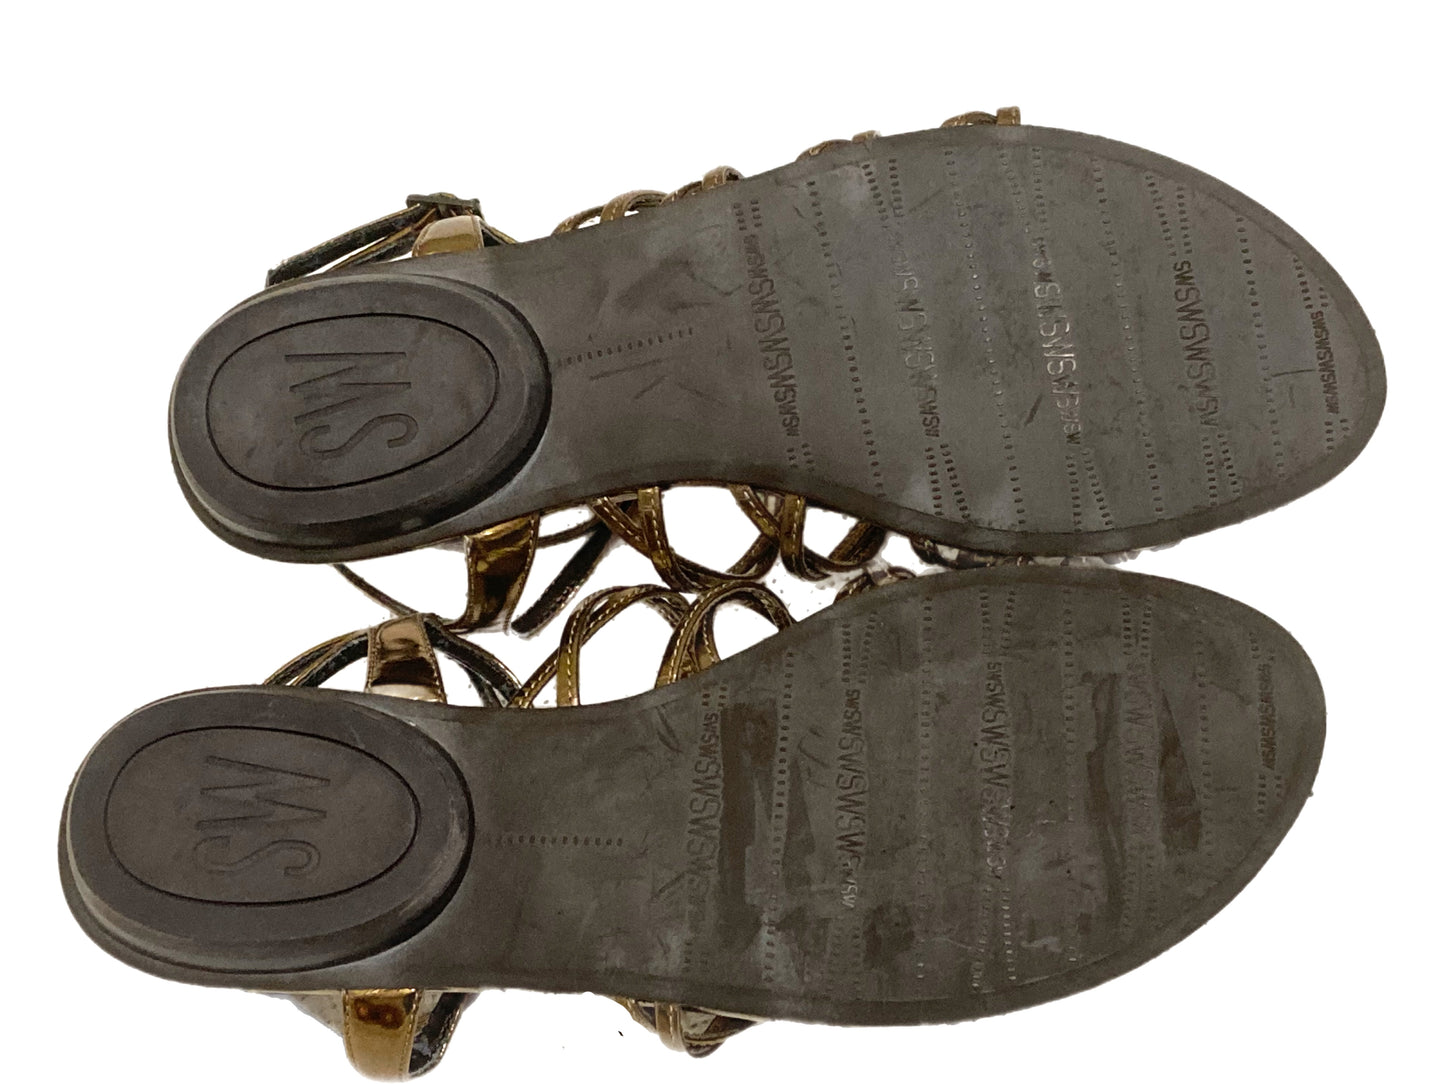 STUART WEITZMAN Leather Control Sandals Bronze Size 5